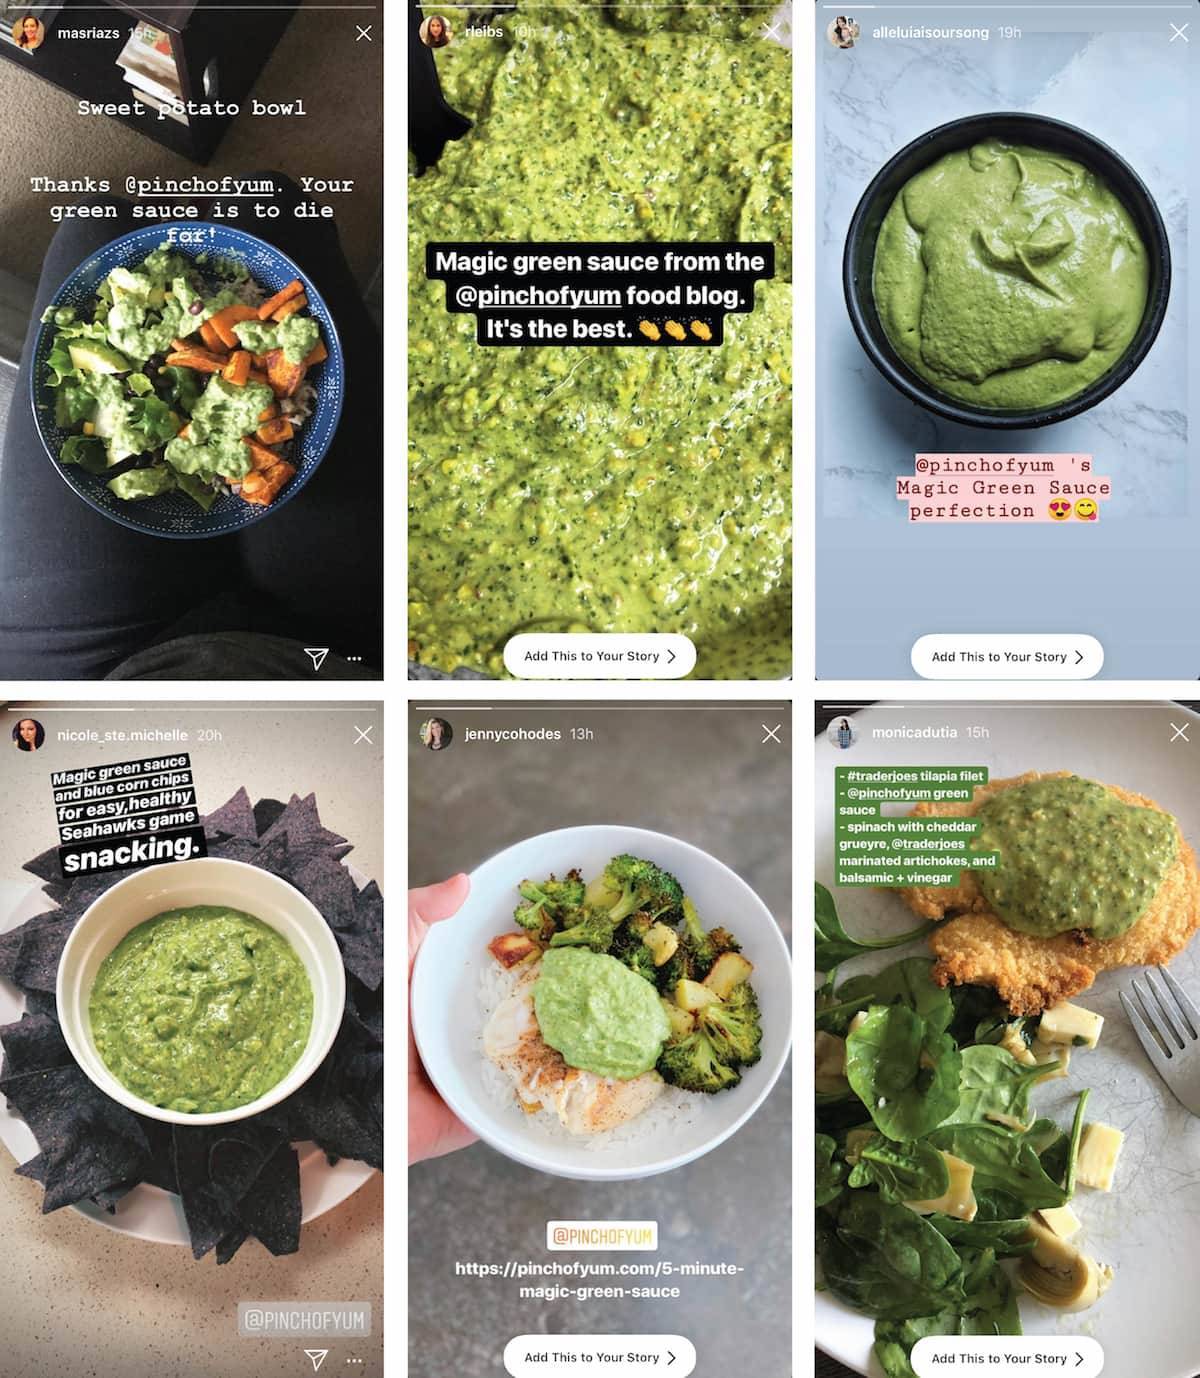 Instagram images of Magic Green Sauce.